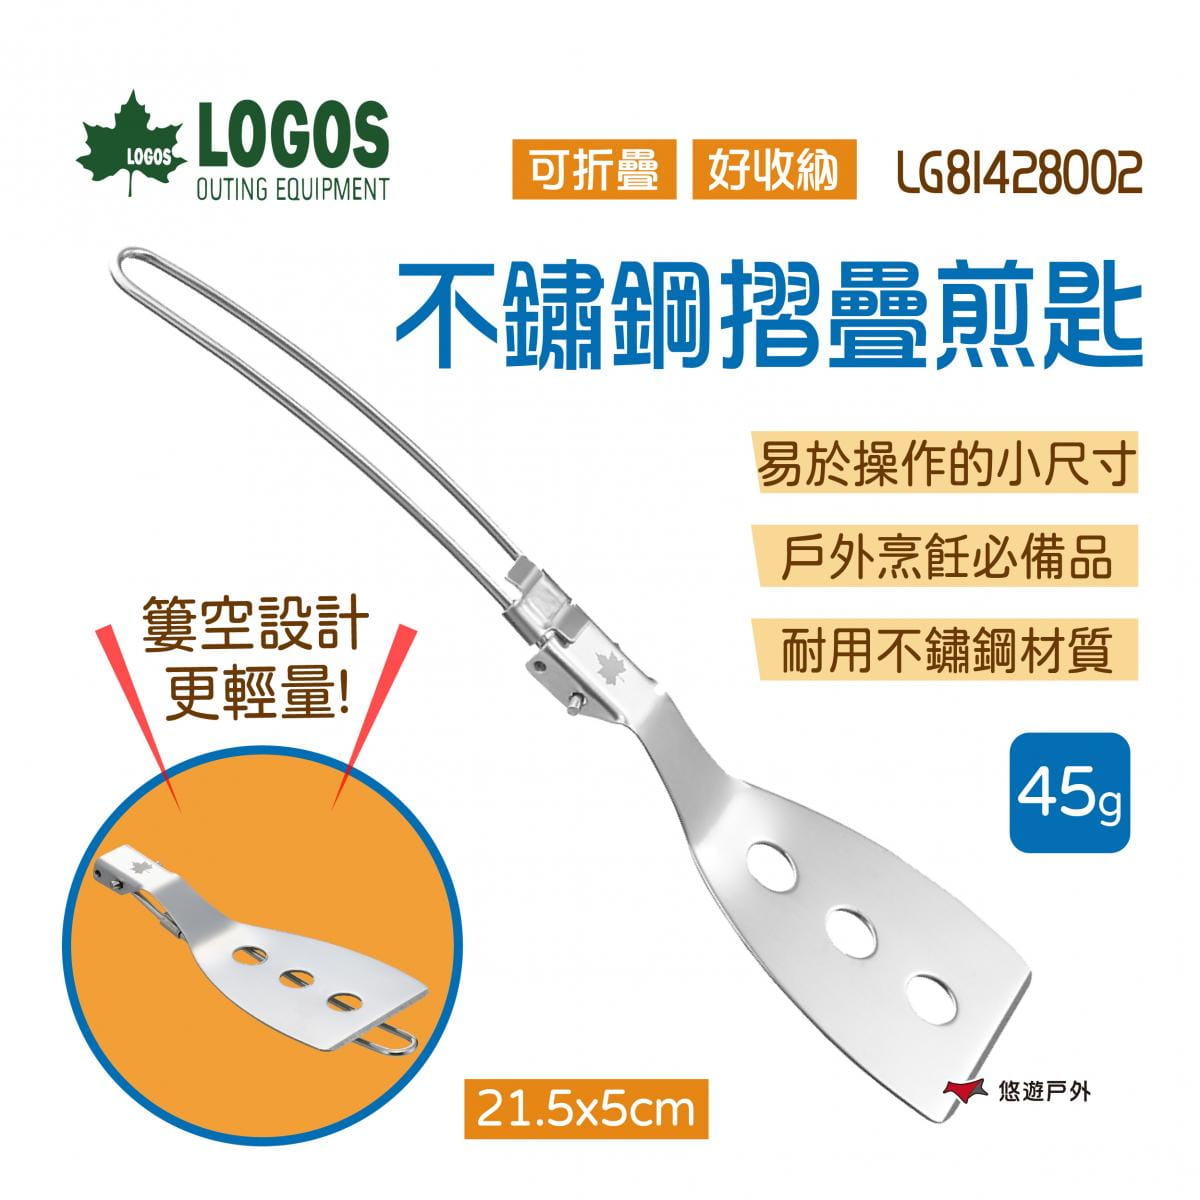 【LOGOS】不鏽鋼摺疊煎匙 LG81428002 悠遊戶外 0